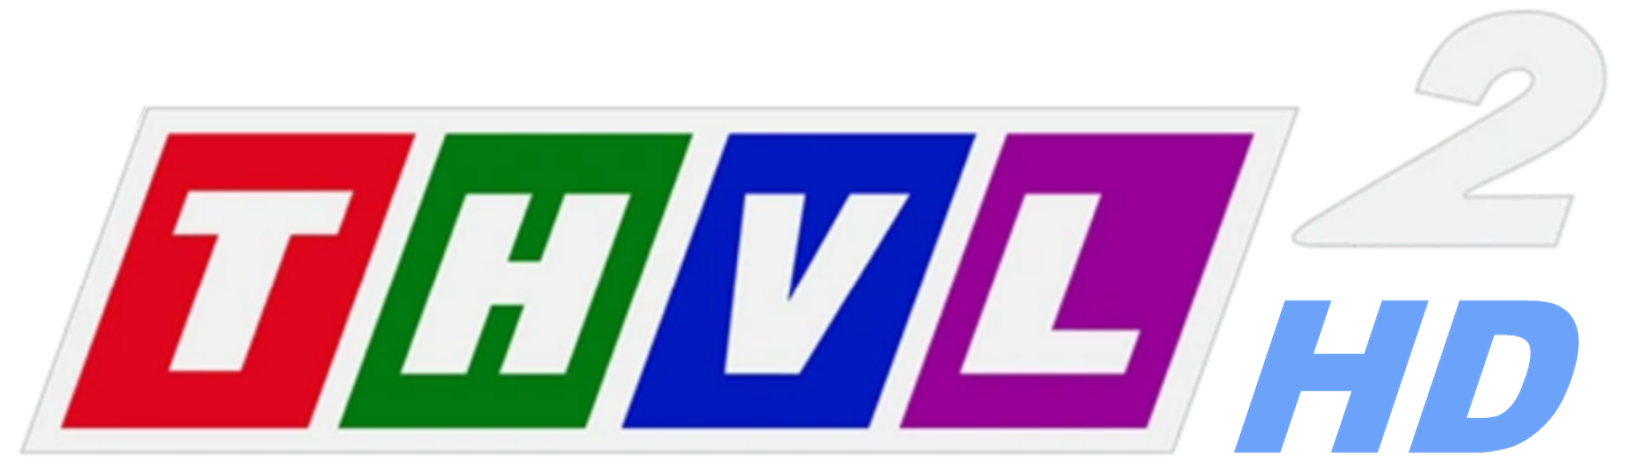 THVL2 HD | Wikia Logos | Fandom